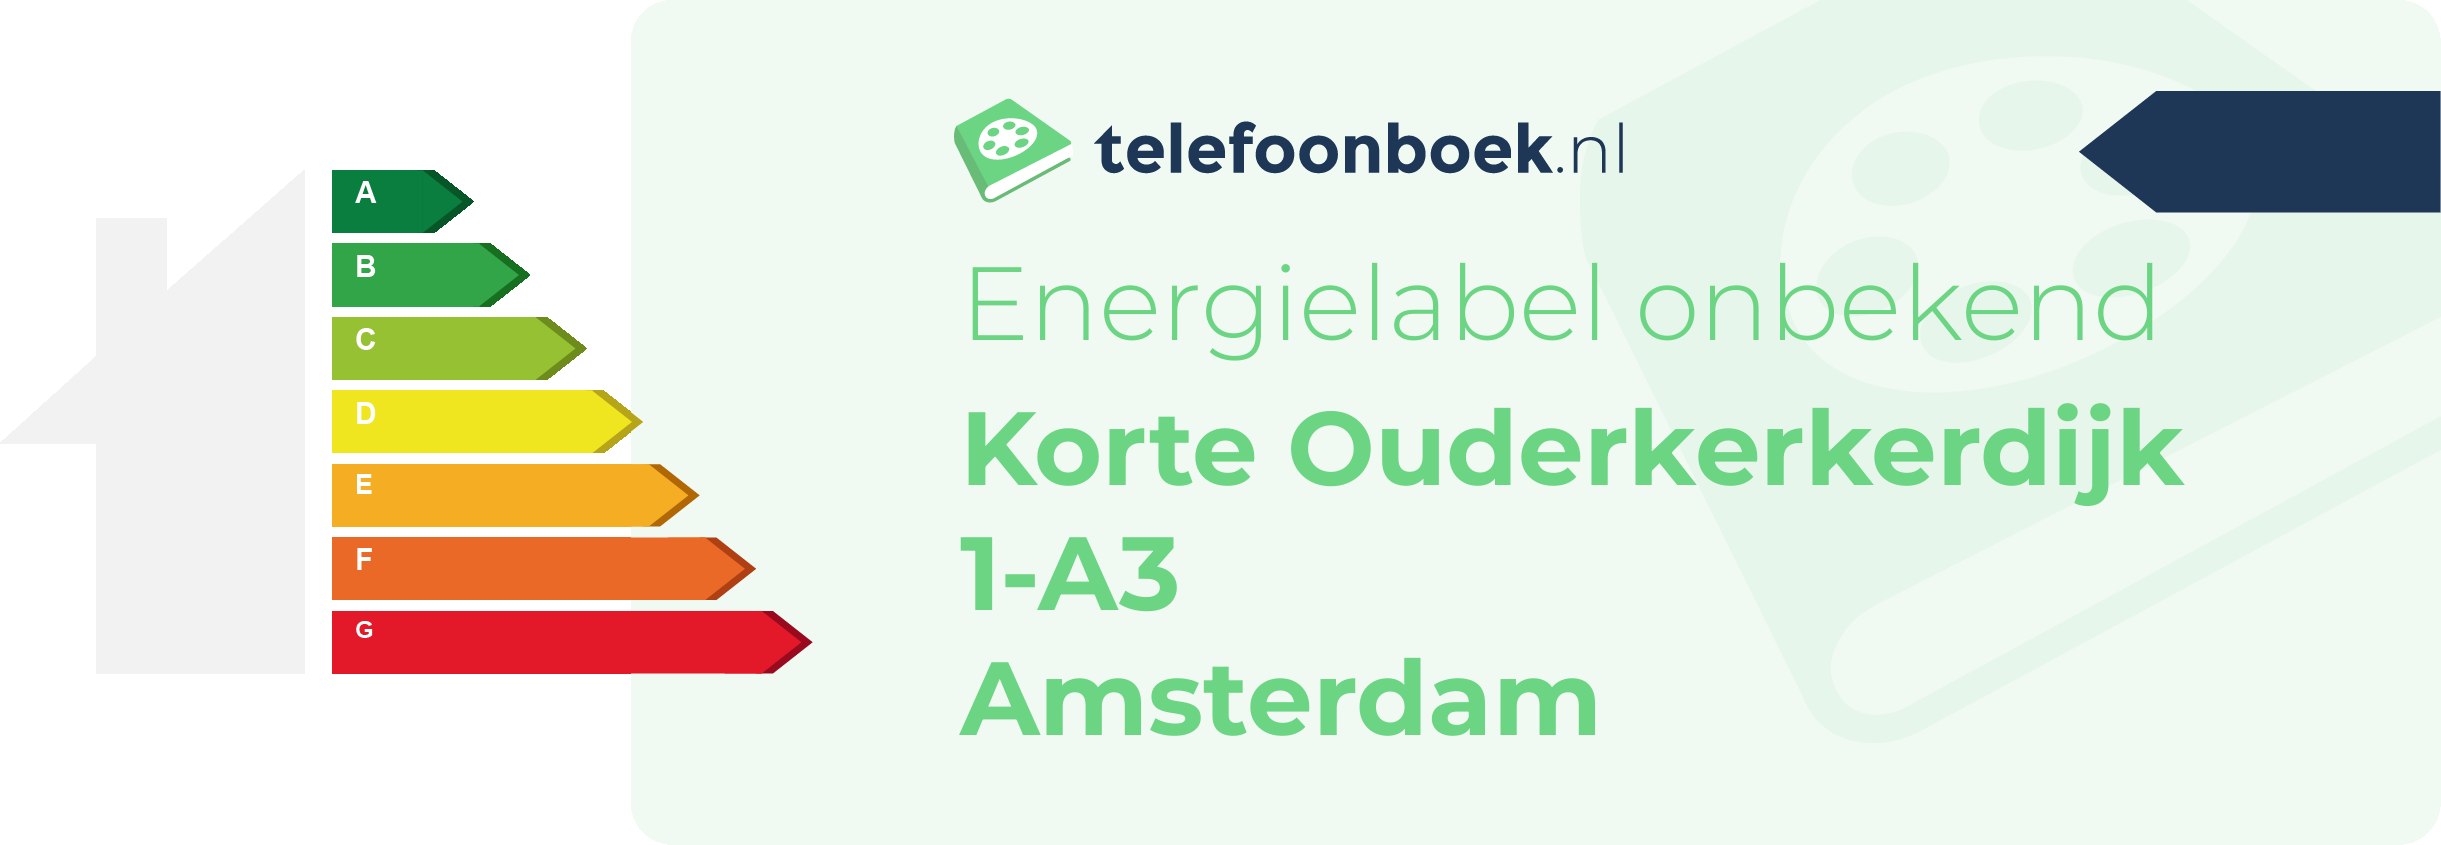 Energielabel Korte Ouderkerkerdijk 1-A3 Amsterdam